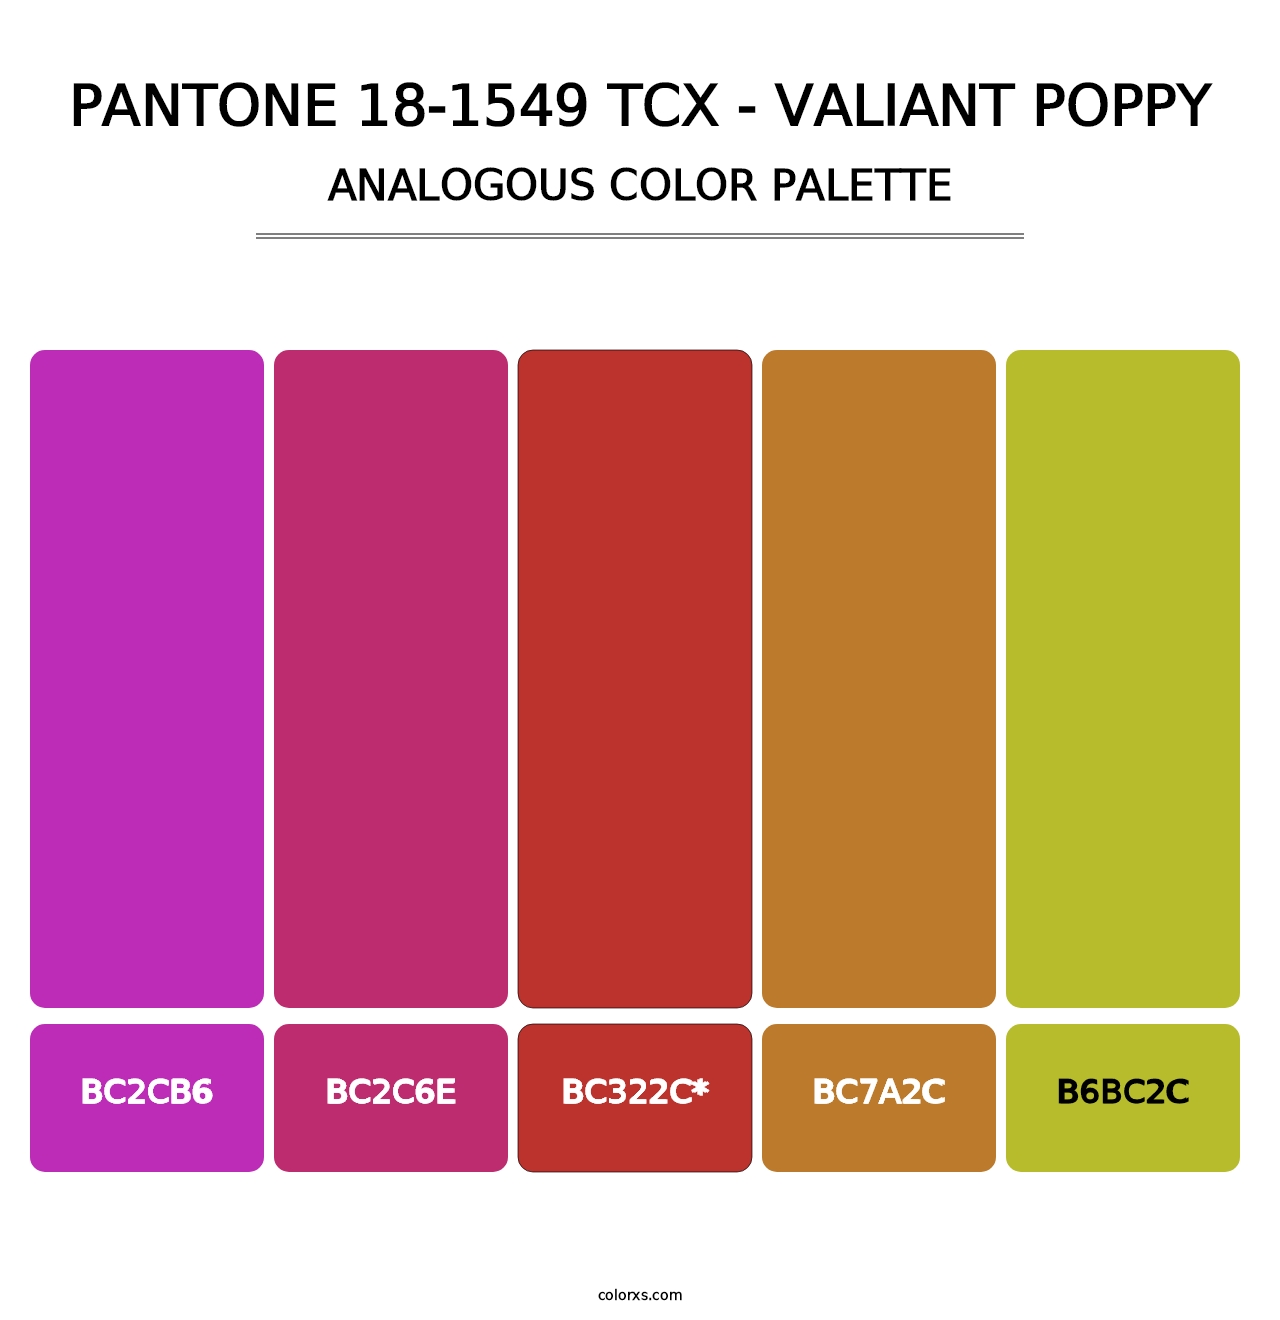 PANTONE 18-1549 TCX - Valiant Poppy - Analogous Color Palette